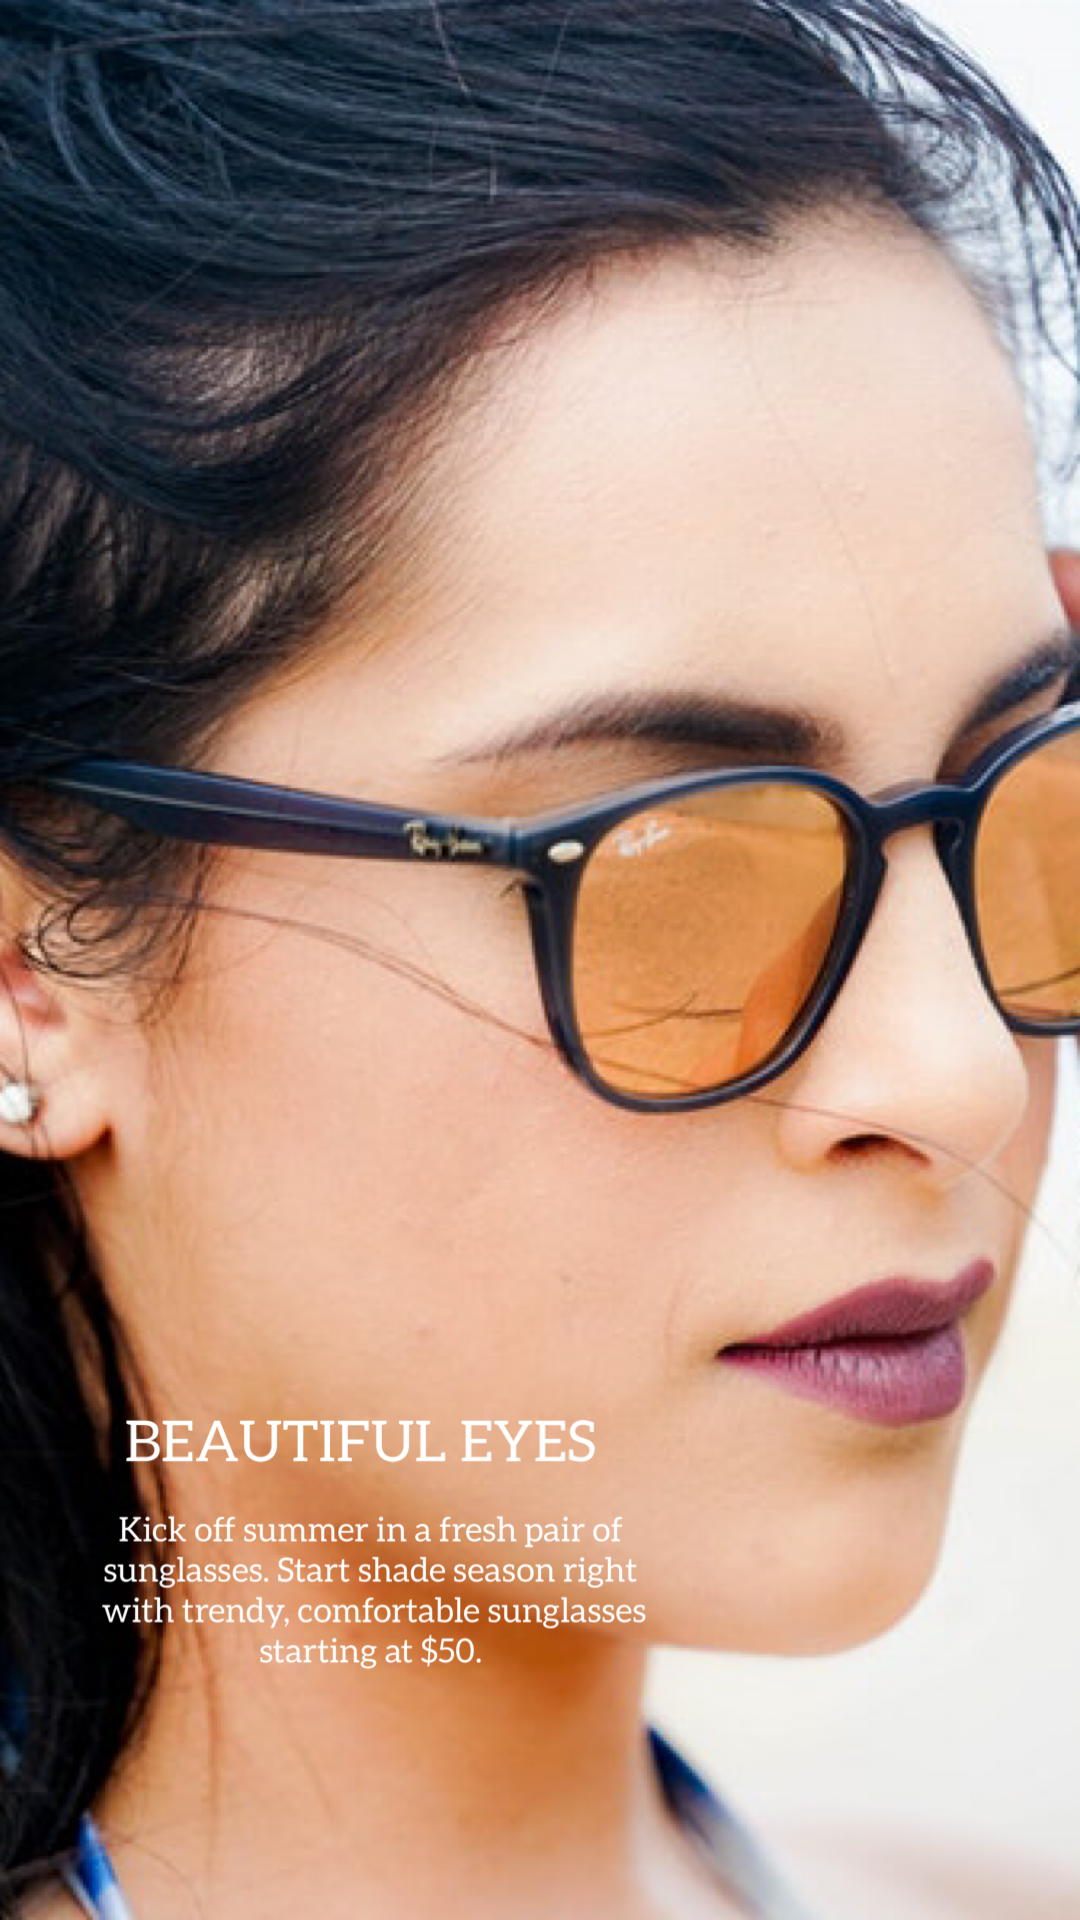 Woman wearing sunglasses beautiful eyes Classy template